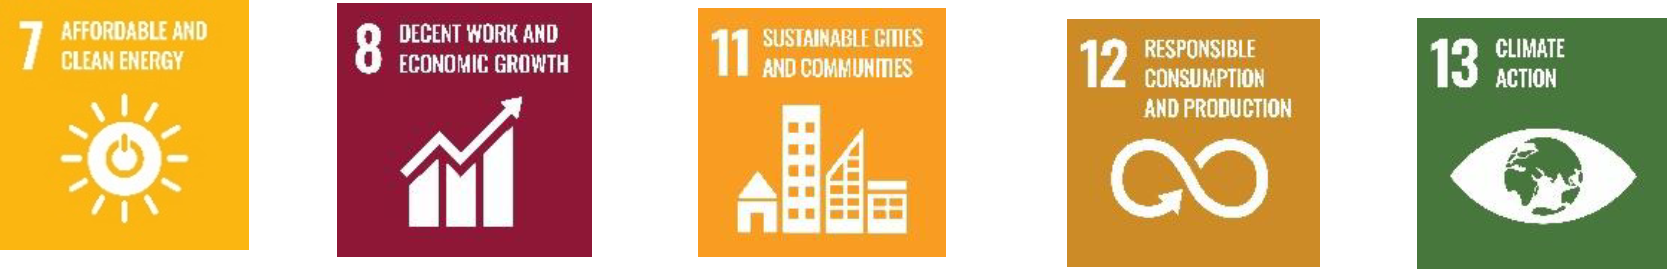 going green - UN Sustainable Development Goals.png